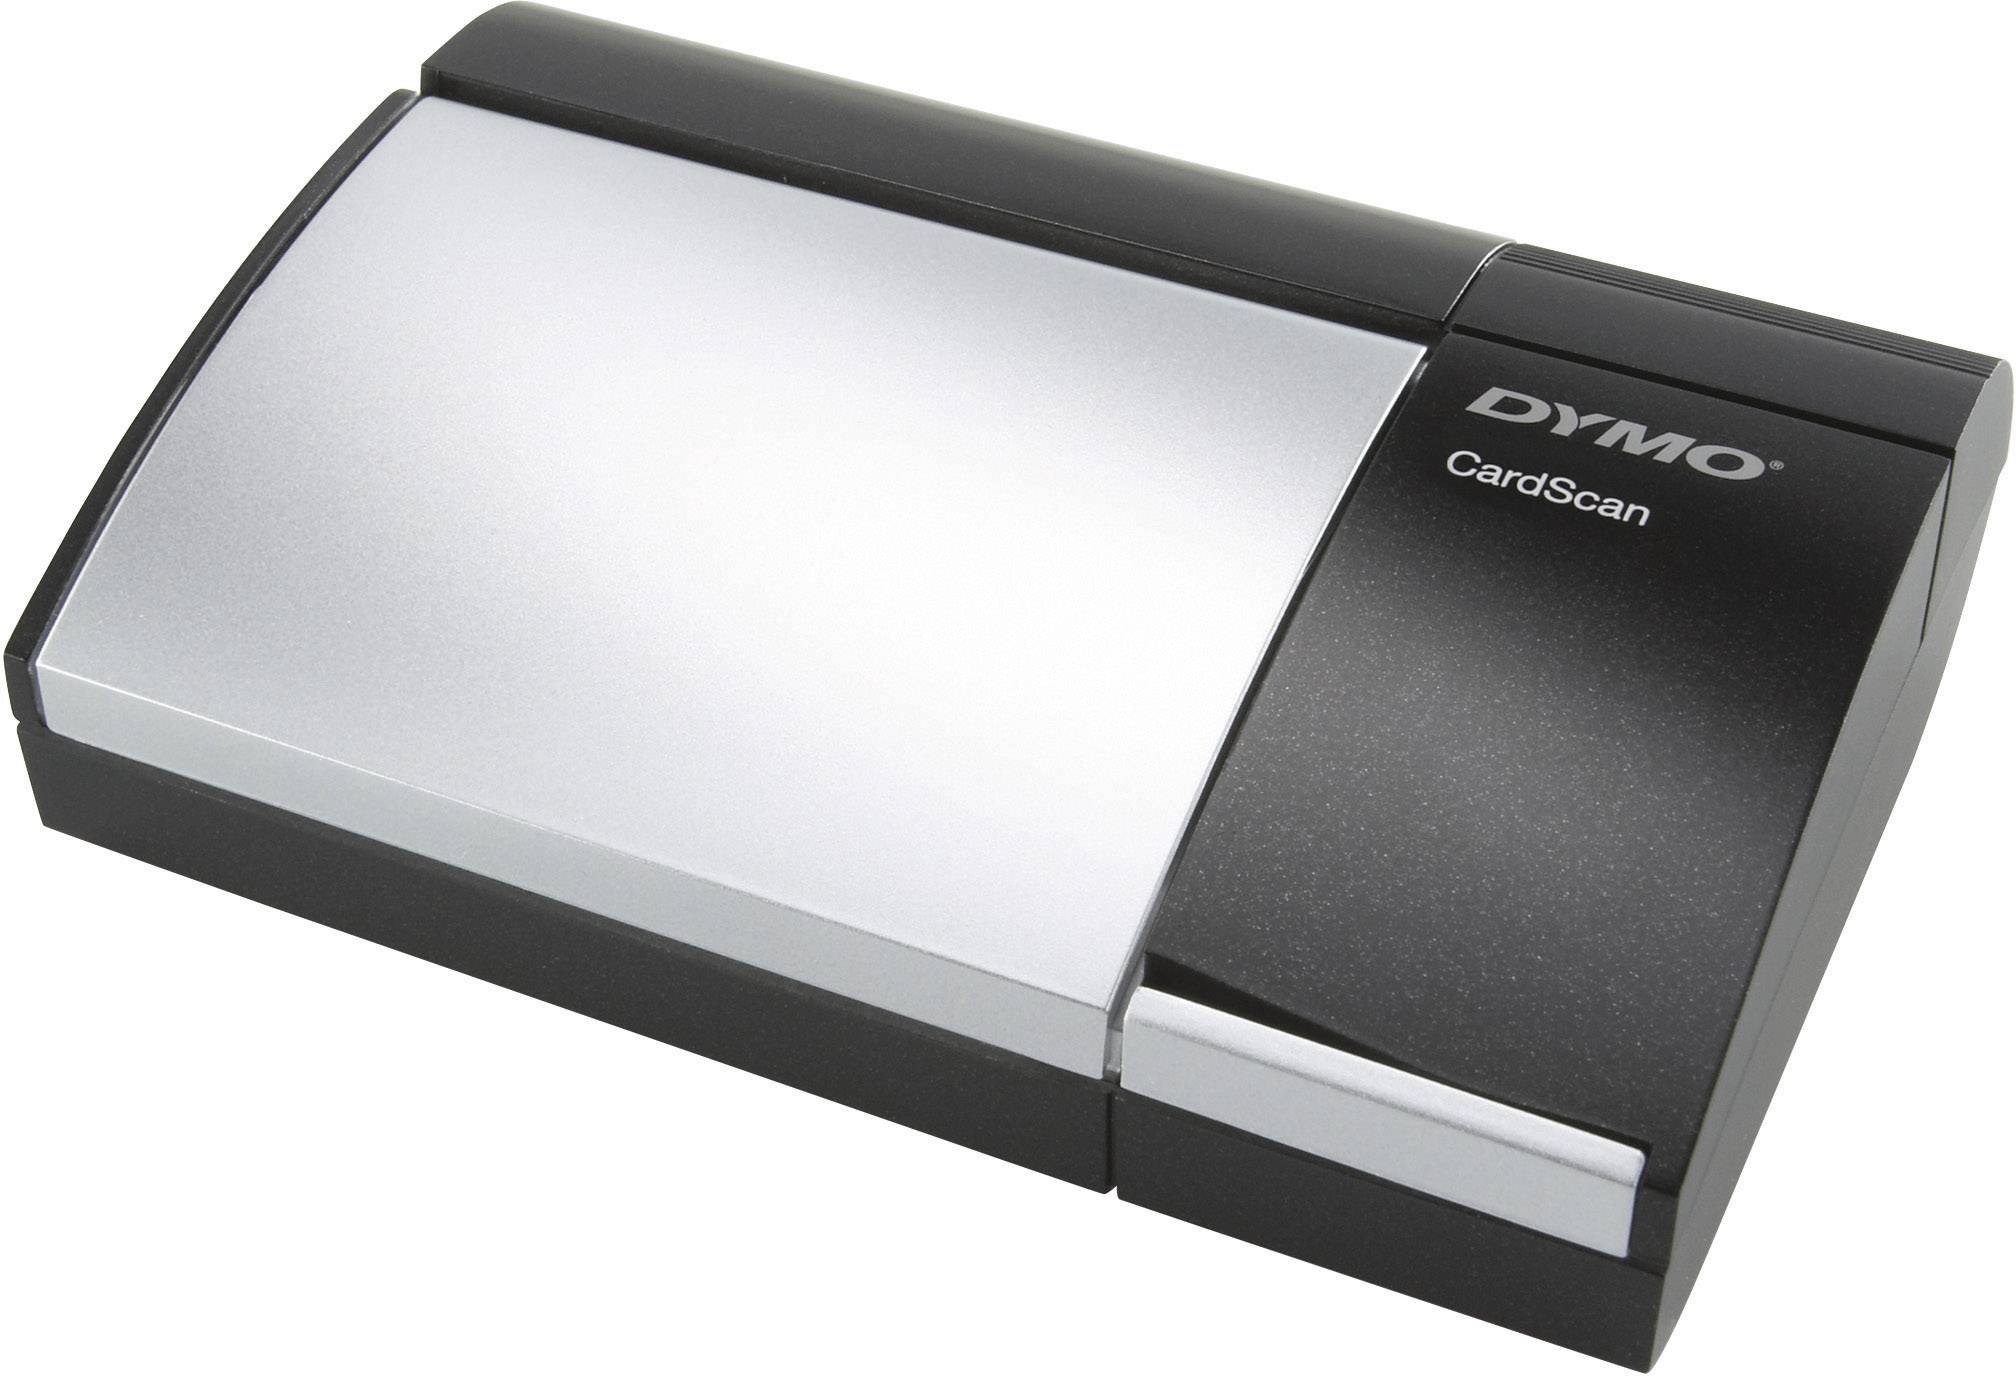 DYMO CardScan Personal V9 Business card scanner 300 x 300 dpi USB | Conrad.com